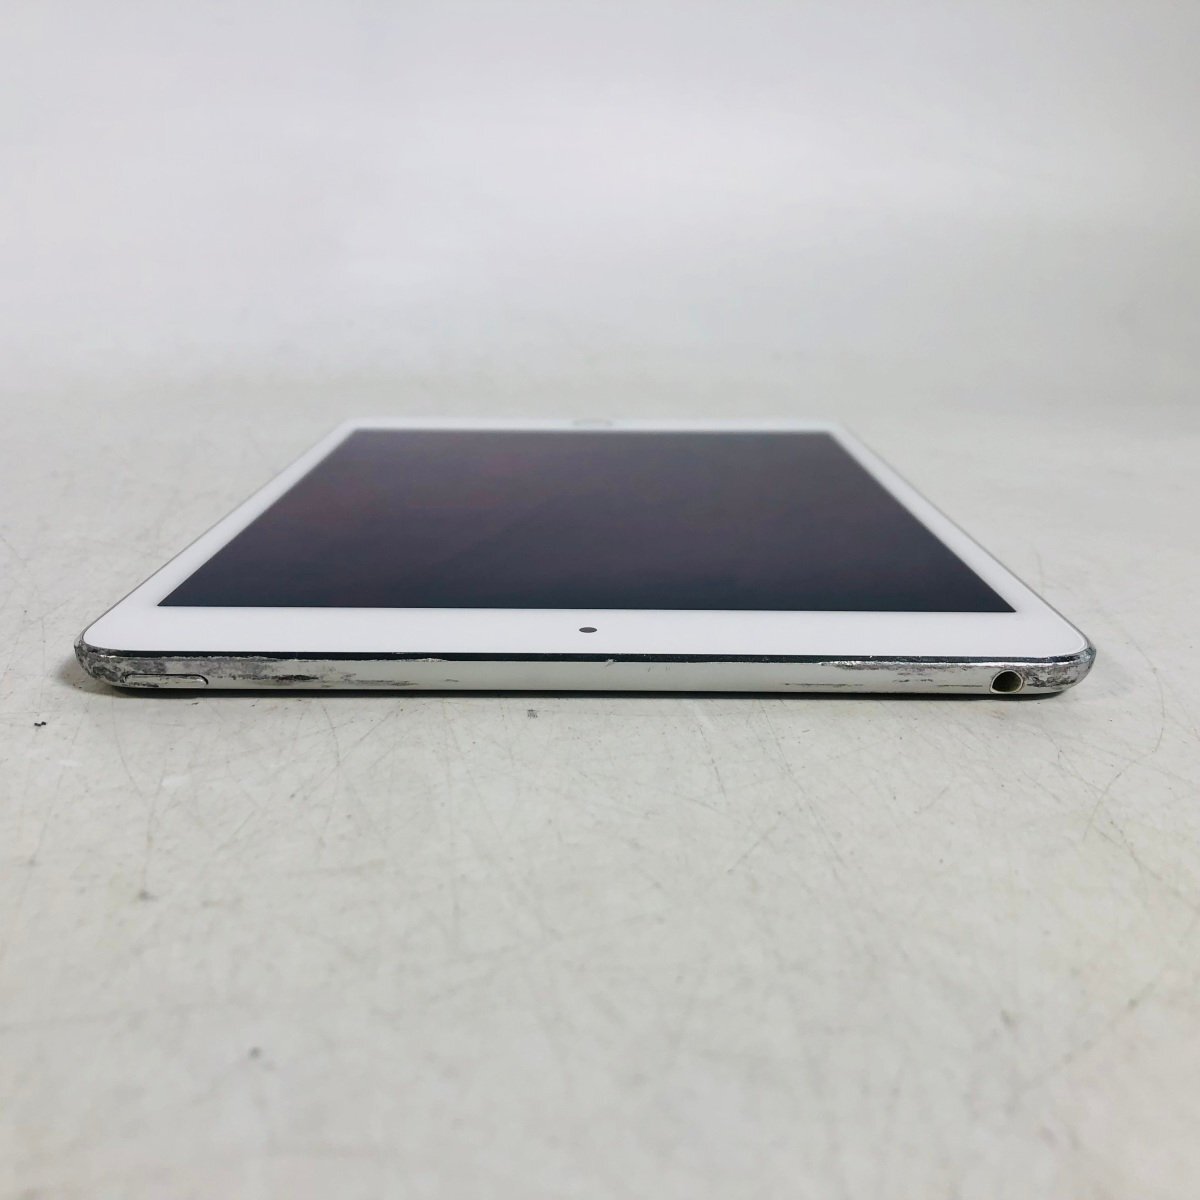 iPad mini 4 Wi-Fi модель 128GB серебряный MK9P2J/A